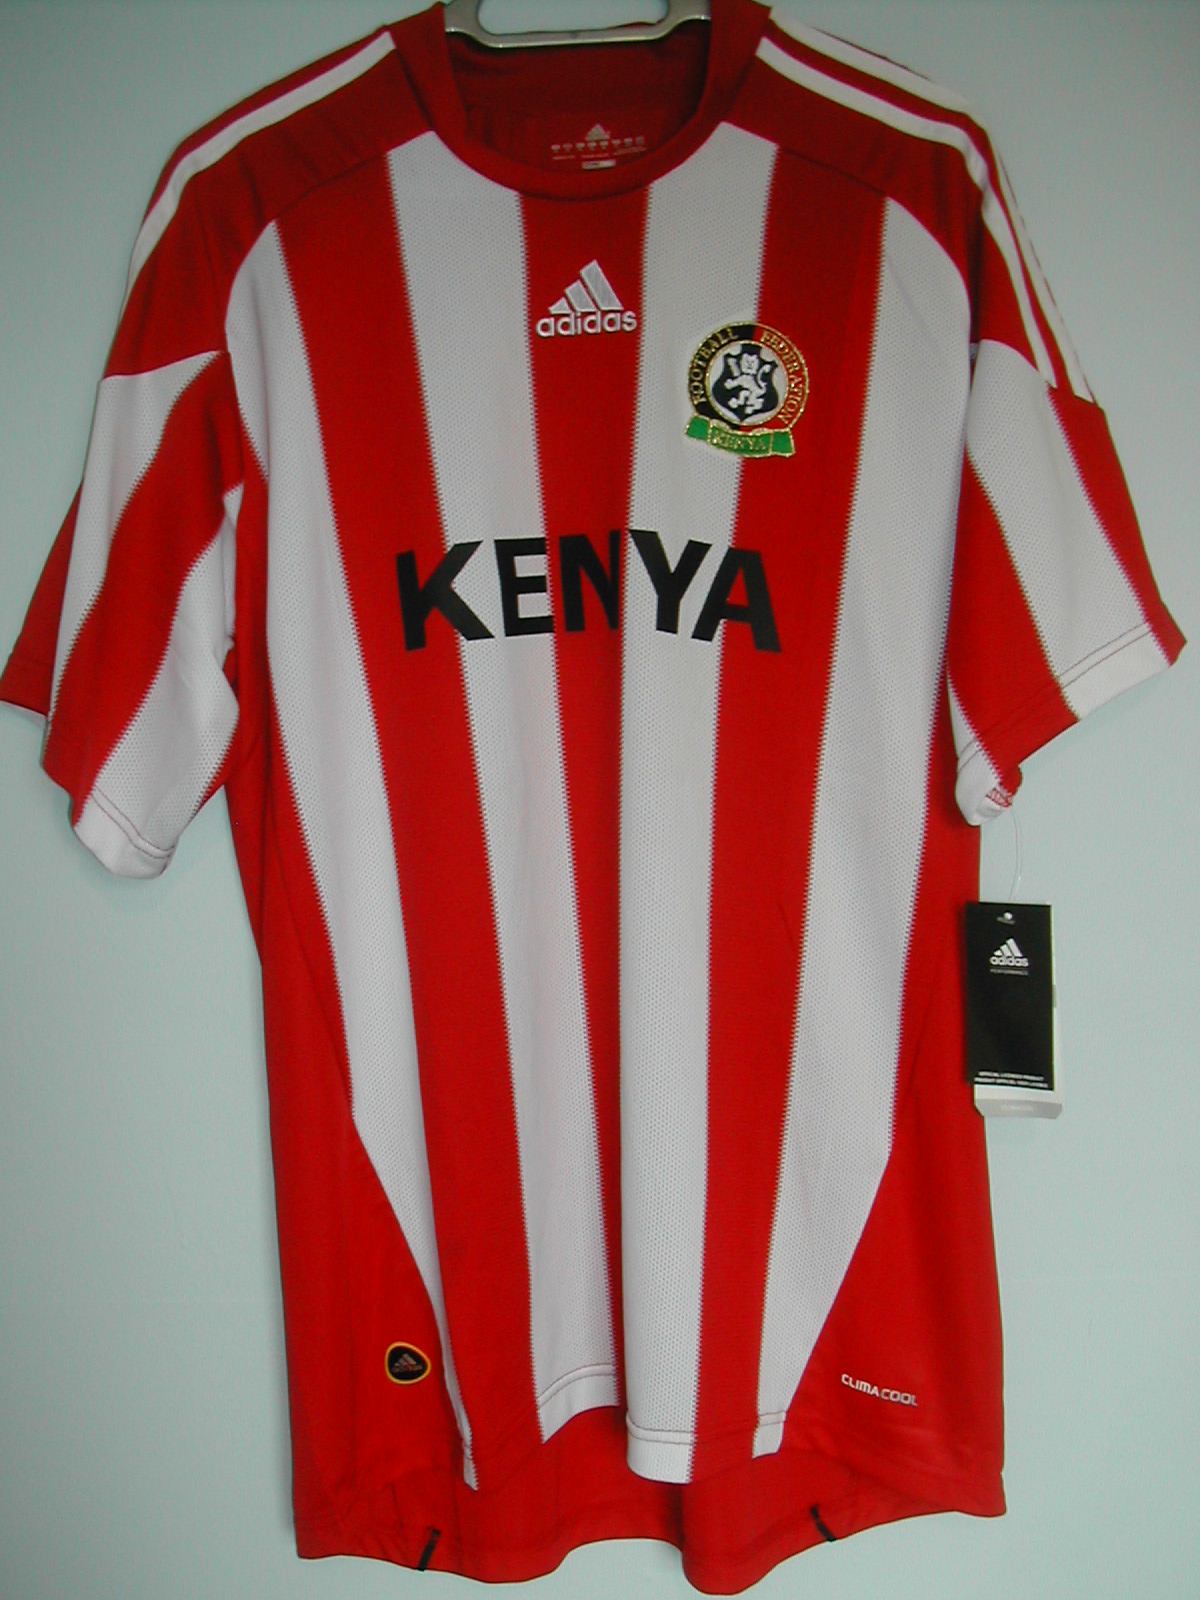 Football Shirt World » Blog Archive » A new Kenya shirt  kenya football blog